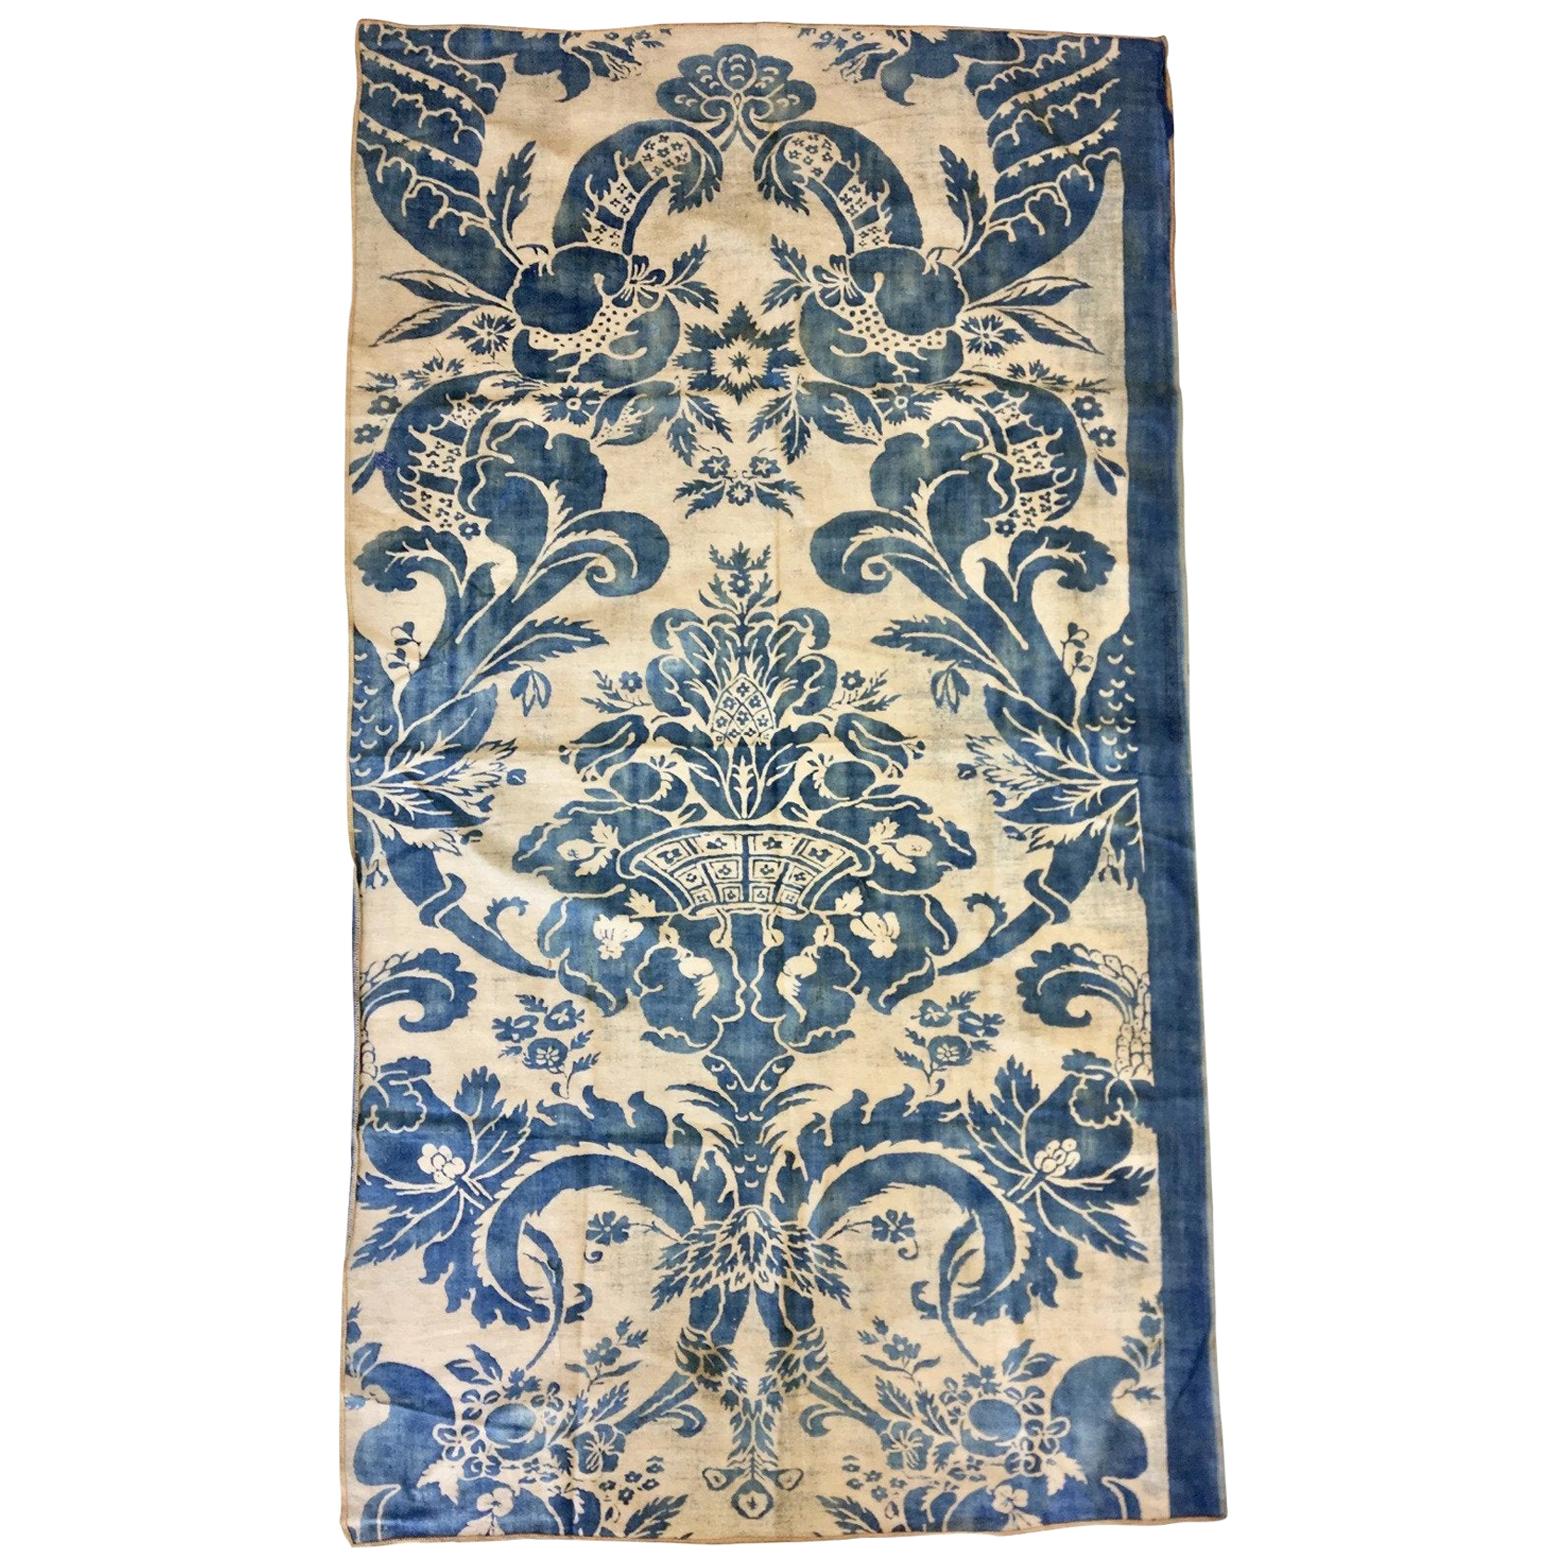 Length of Vintage Indigo Blue Vintage Fortuny Fabric